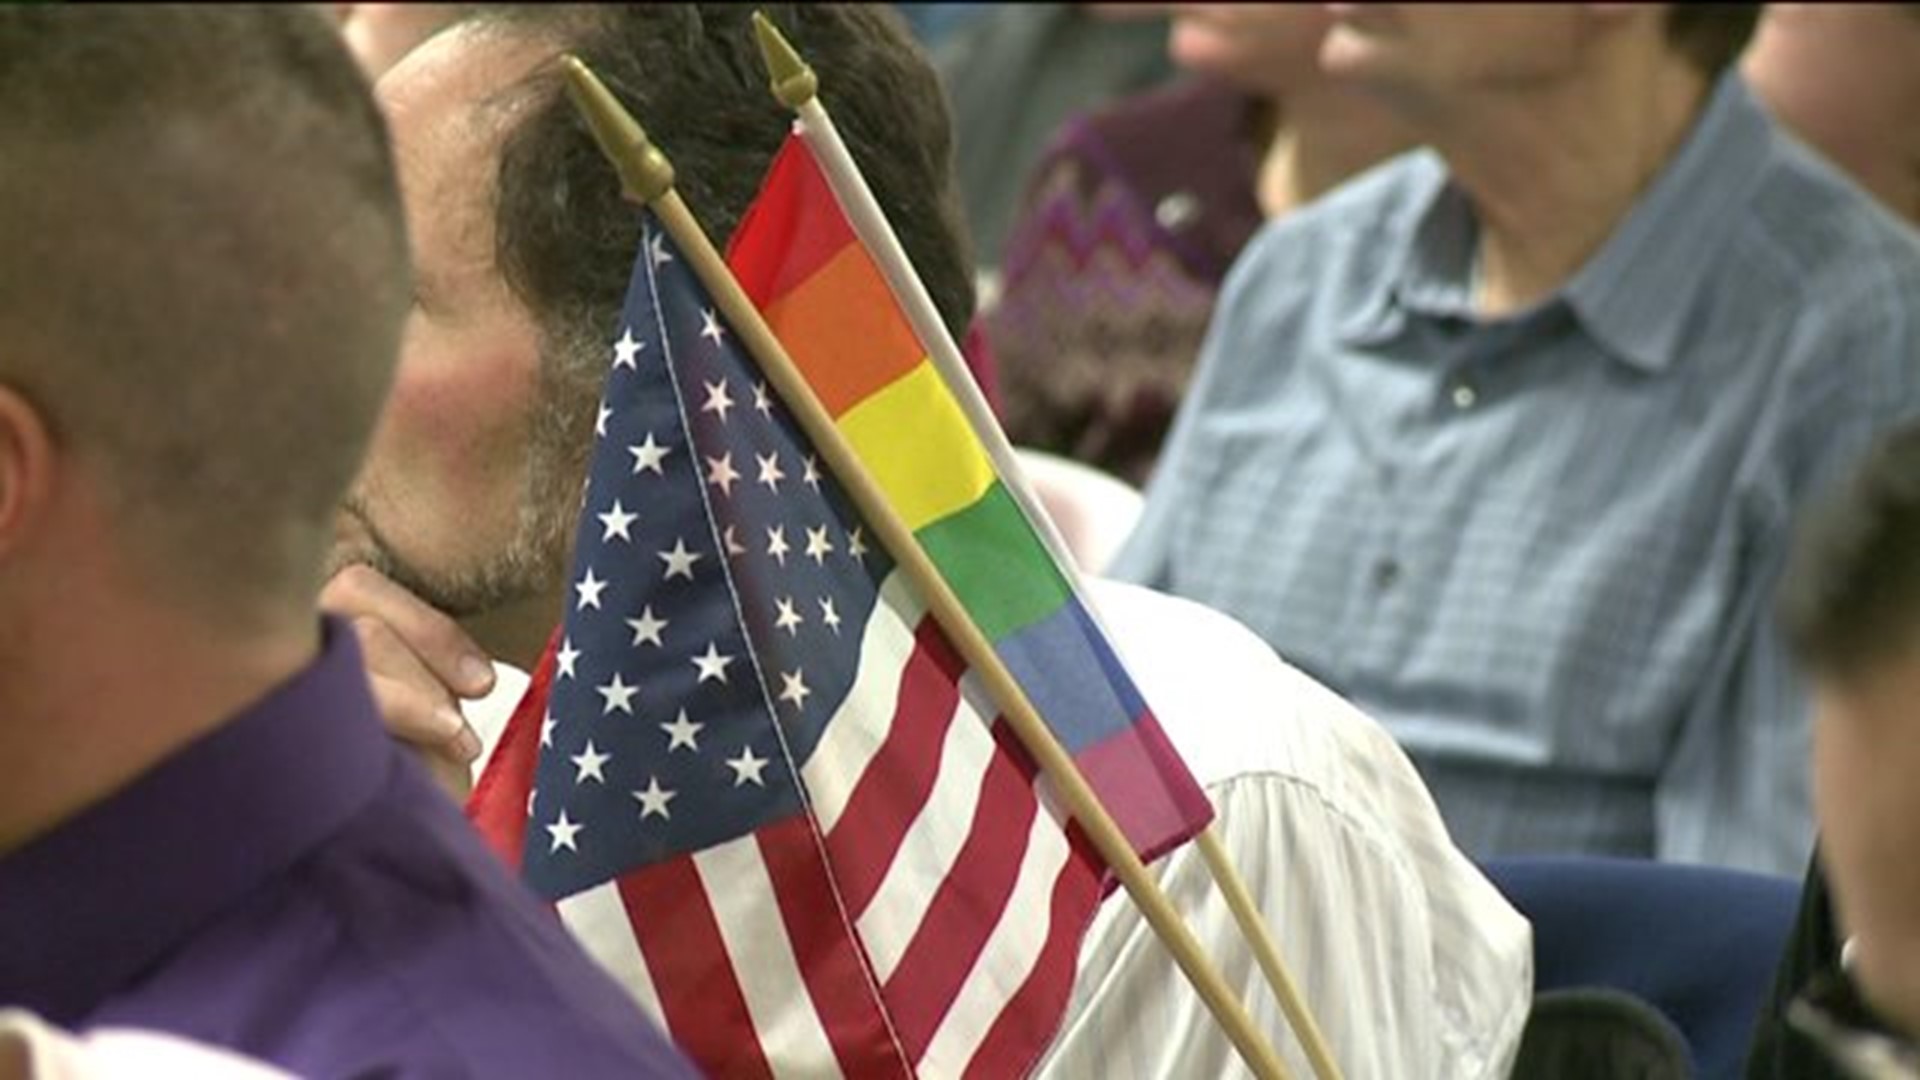 No Anti-Discrimination Ordinance For Gay, Lesbian Community in Bloomsburg